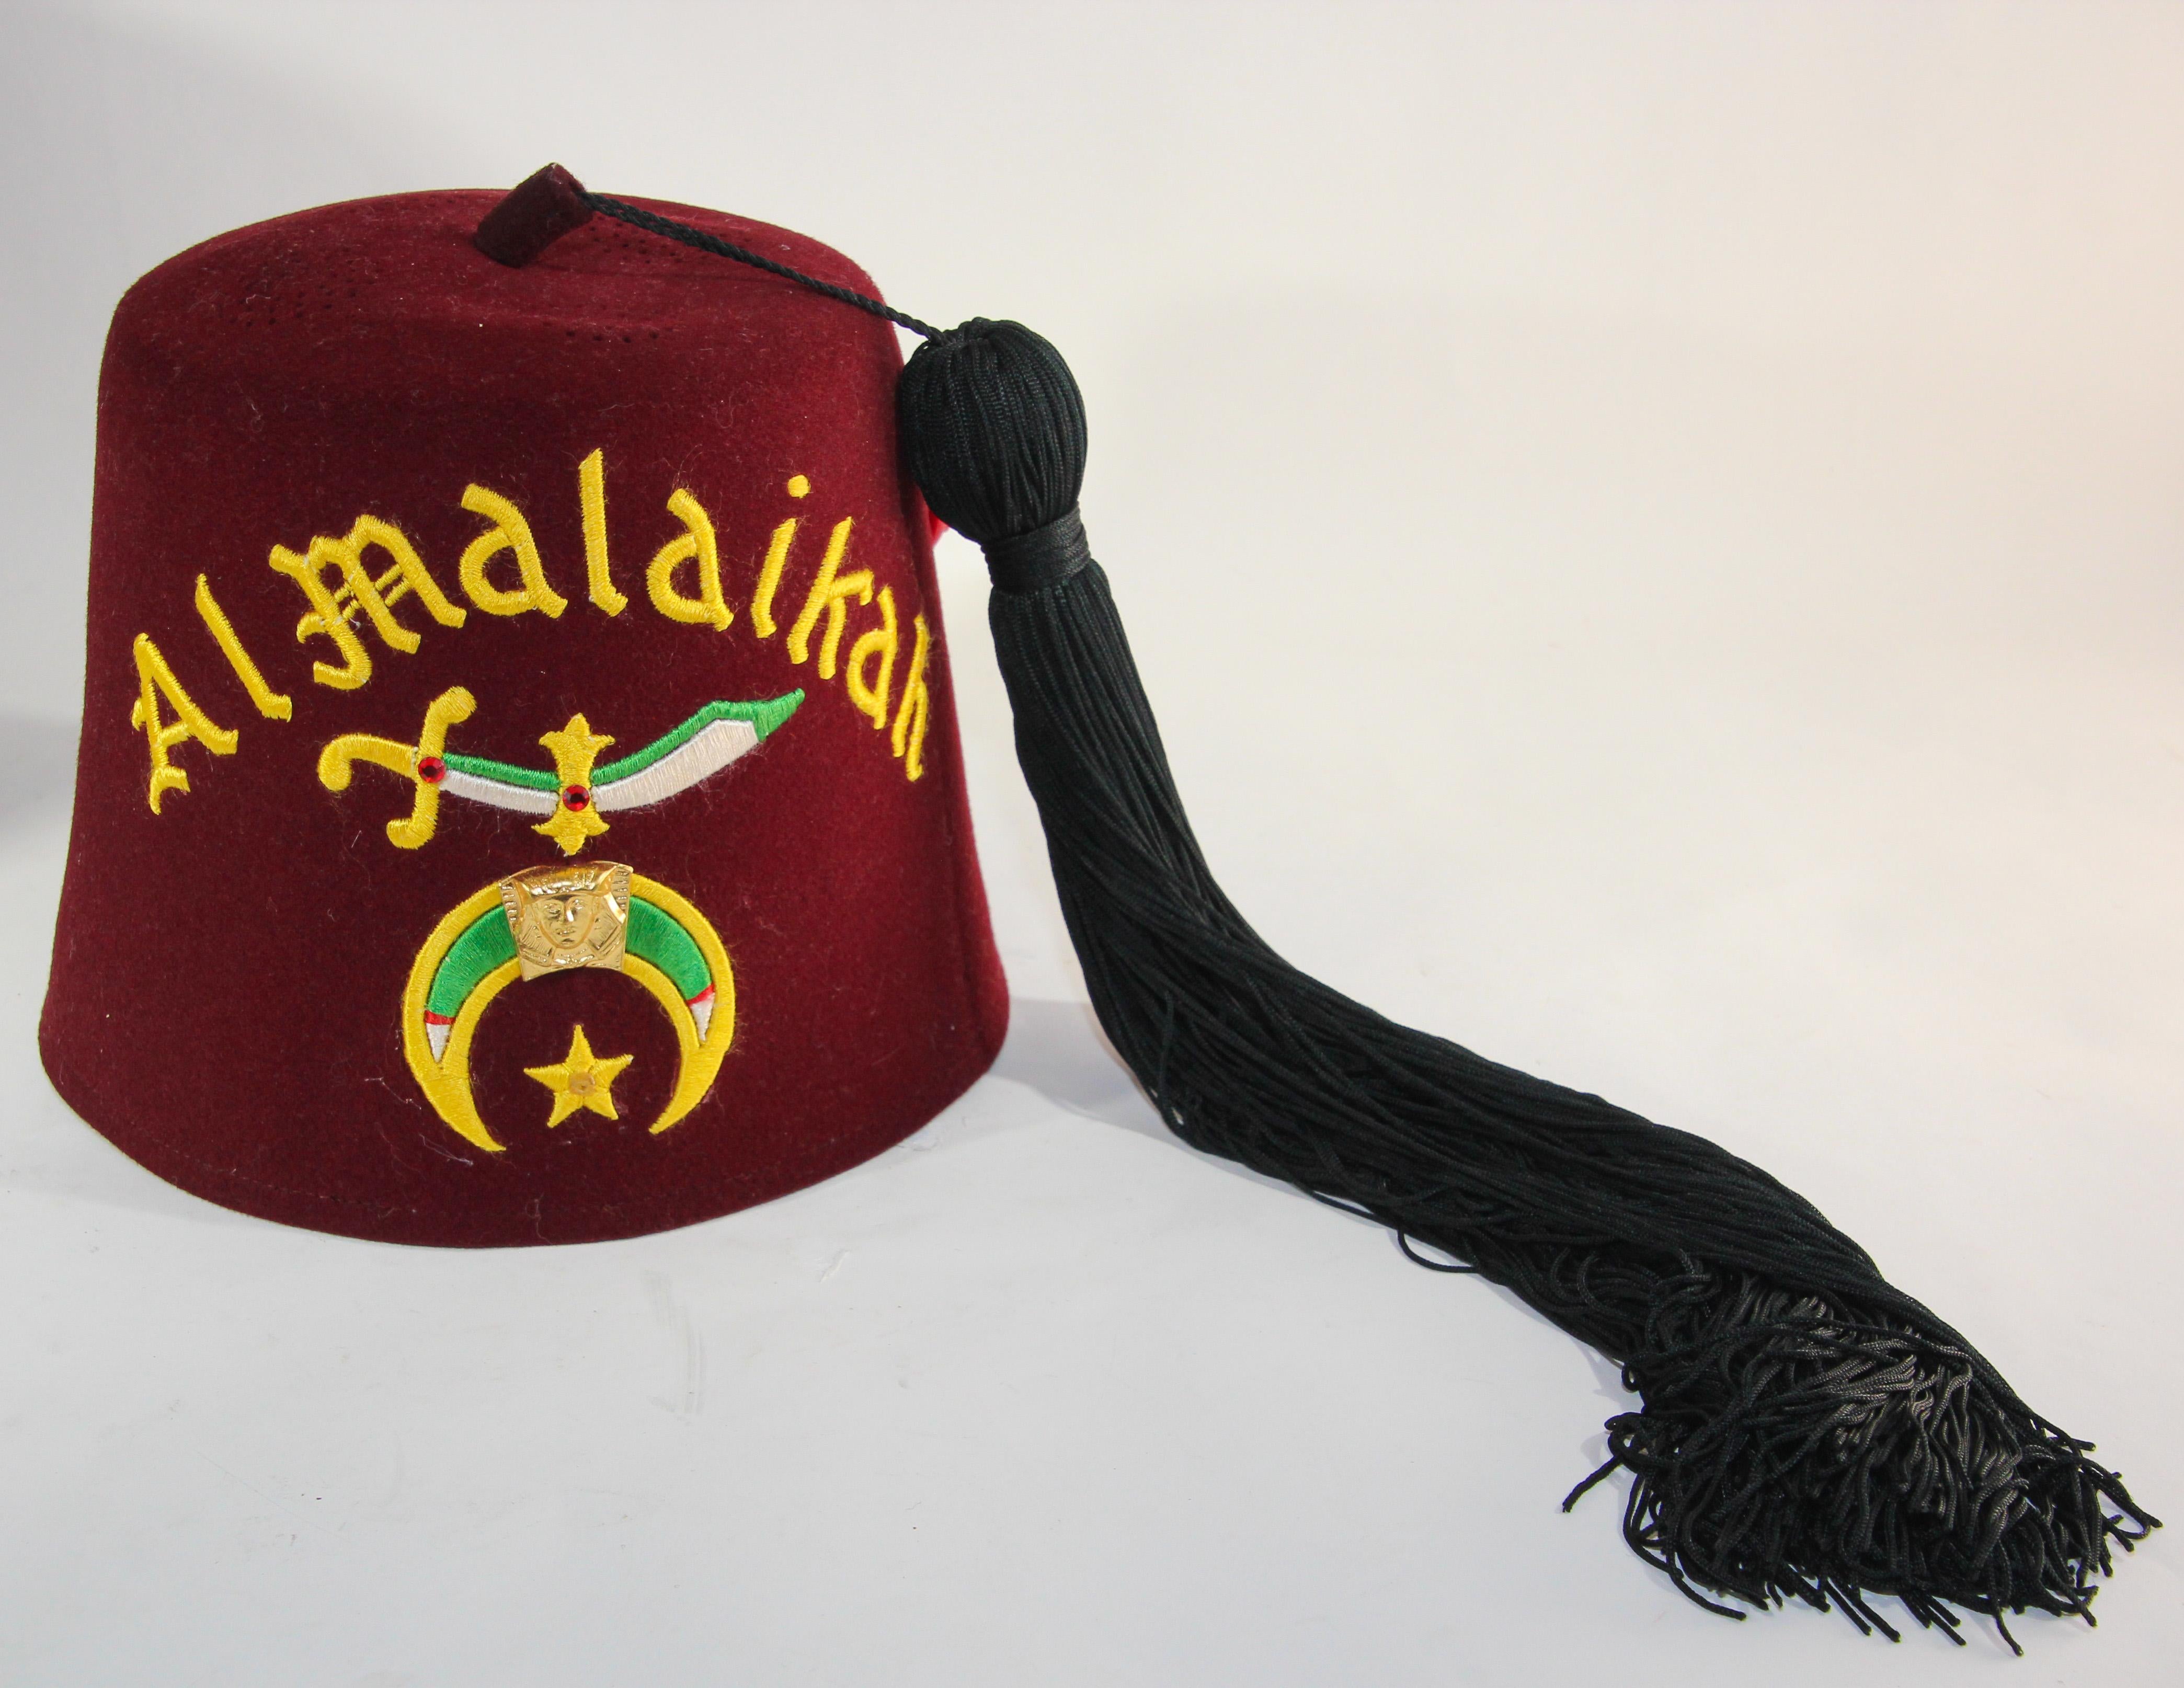 AL Malaikah Vintage Iconic Masonic Shriner Burgundy Wool Fez Hat in Original Box For Sale 5